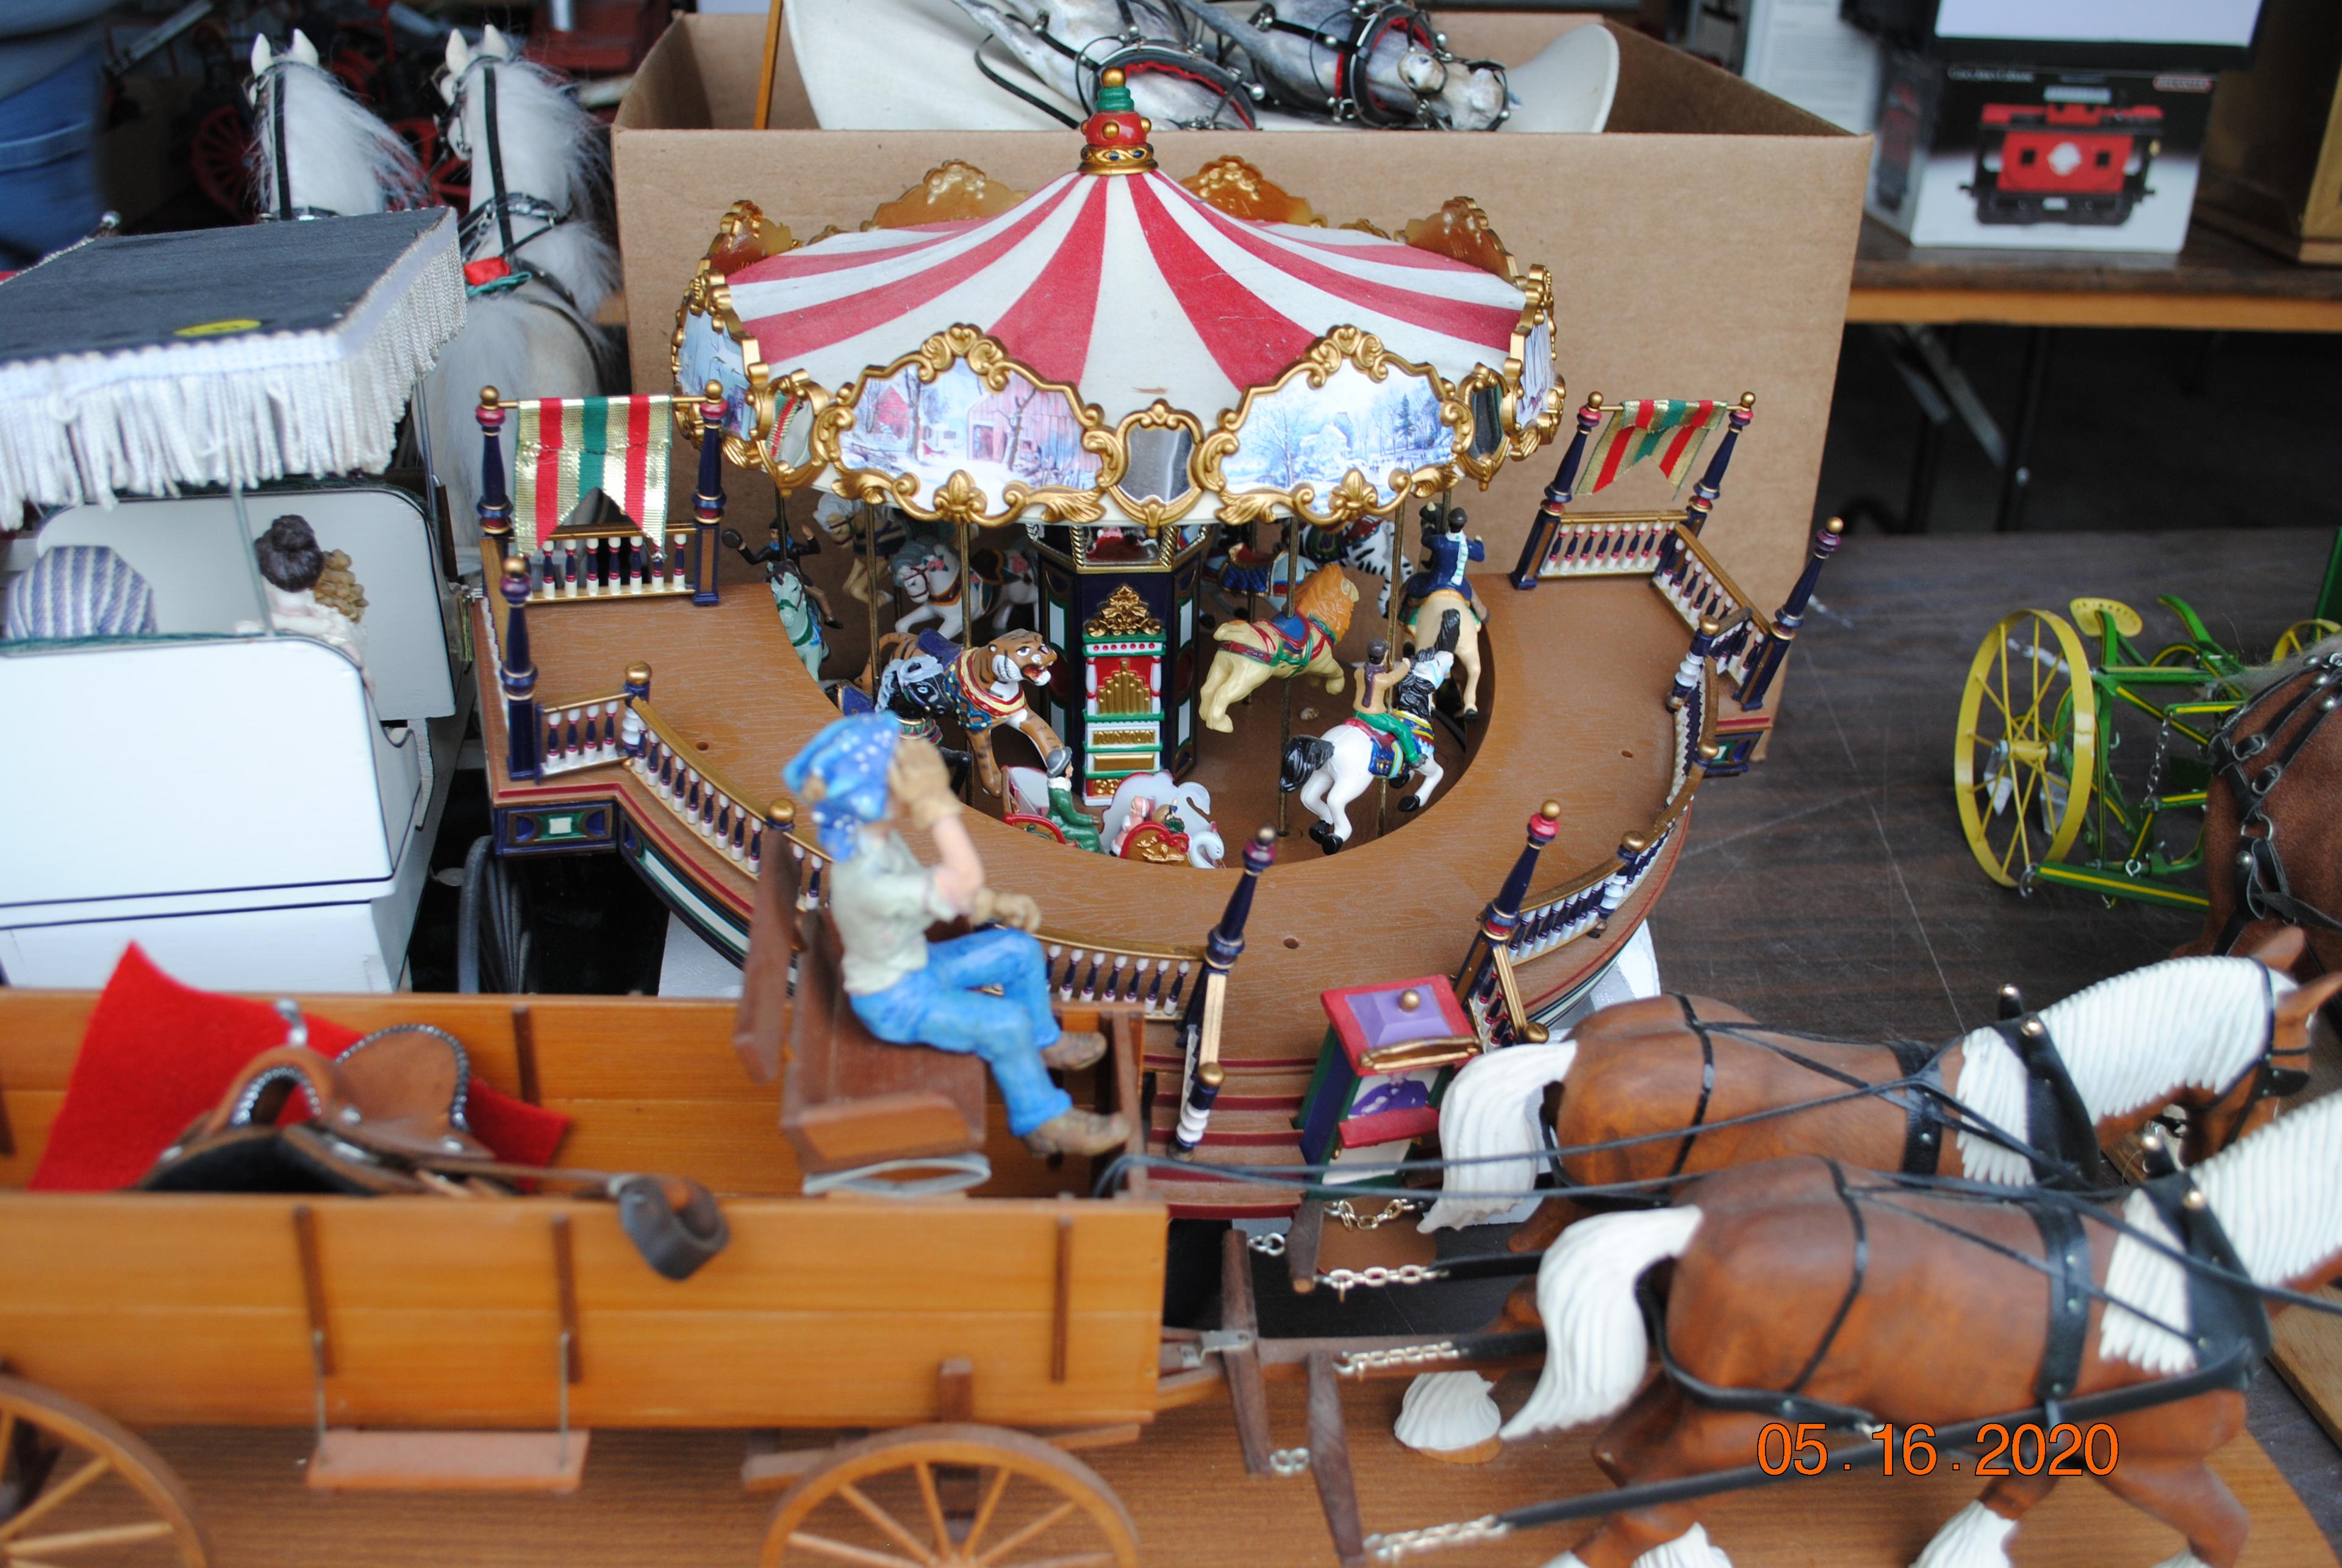 Several horses with wagons, carousel holiday around, Christmas buggy, circus wagon